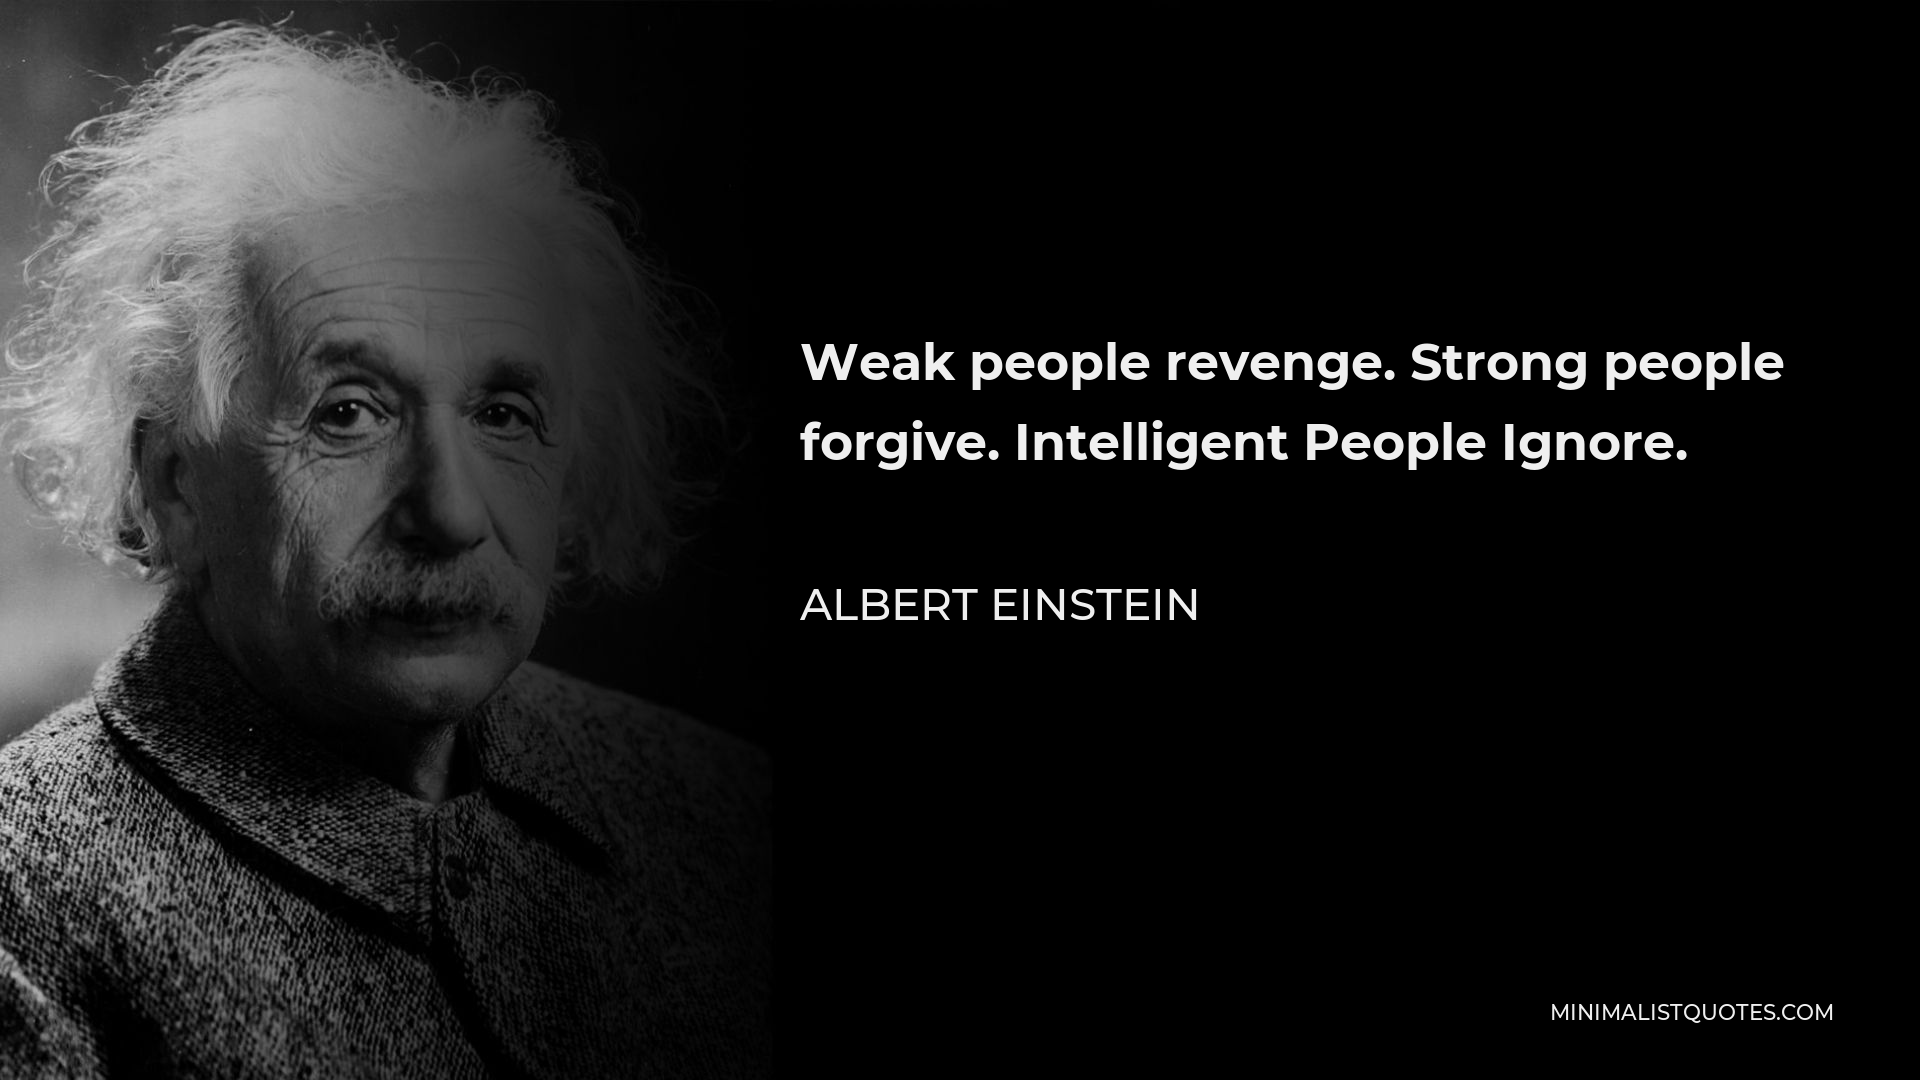 Albert Einstein Quote - Weak people revenge. Strong people forgive. Intelligent People Ignore.